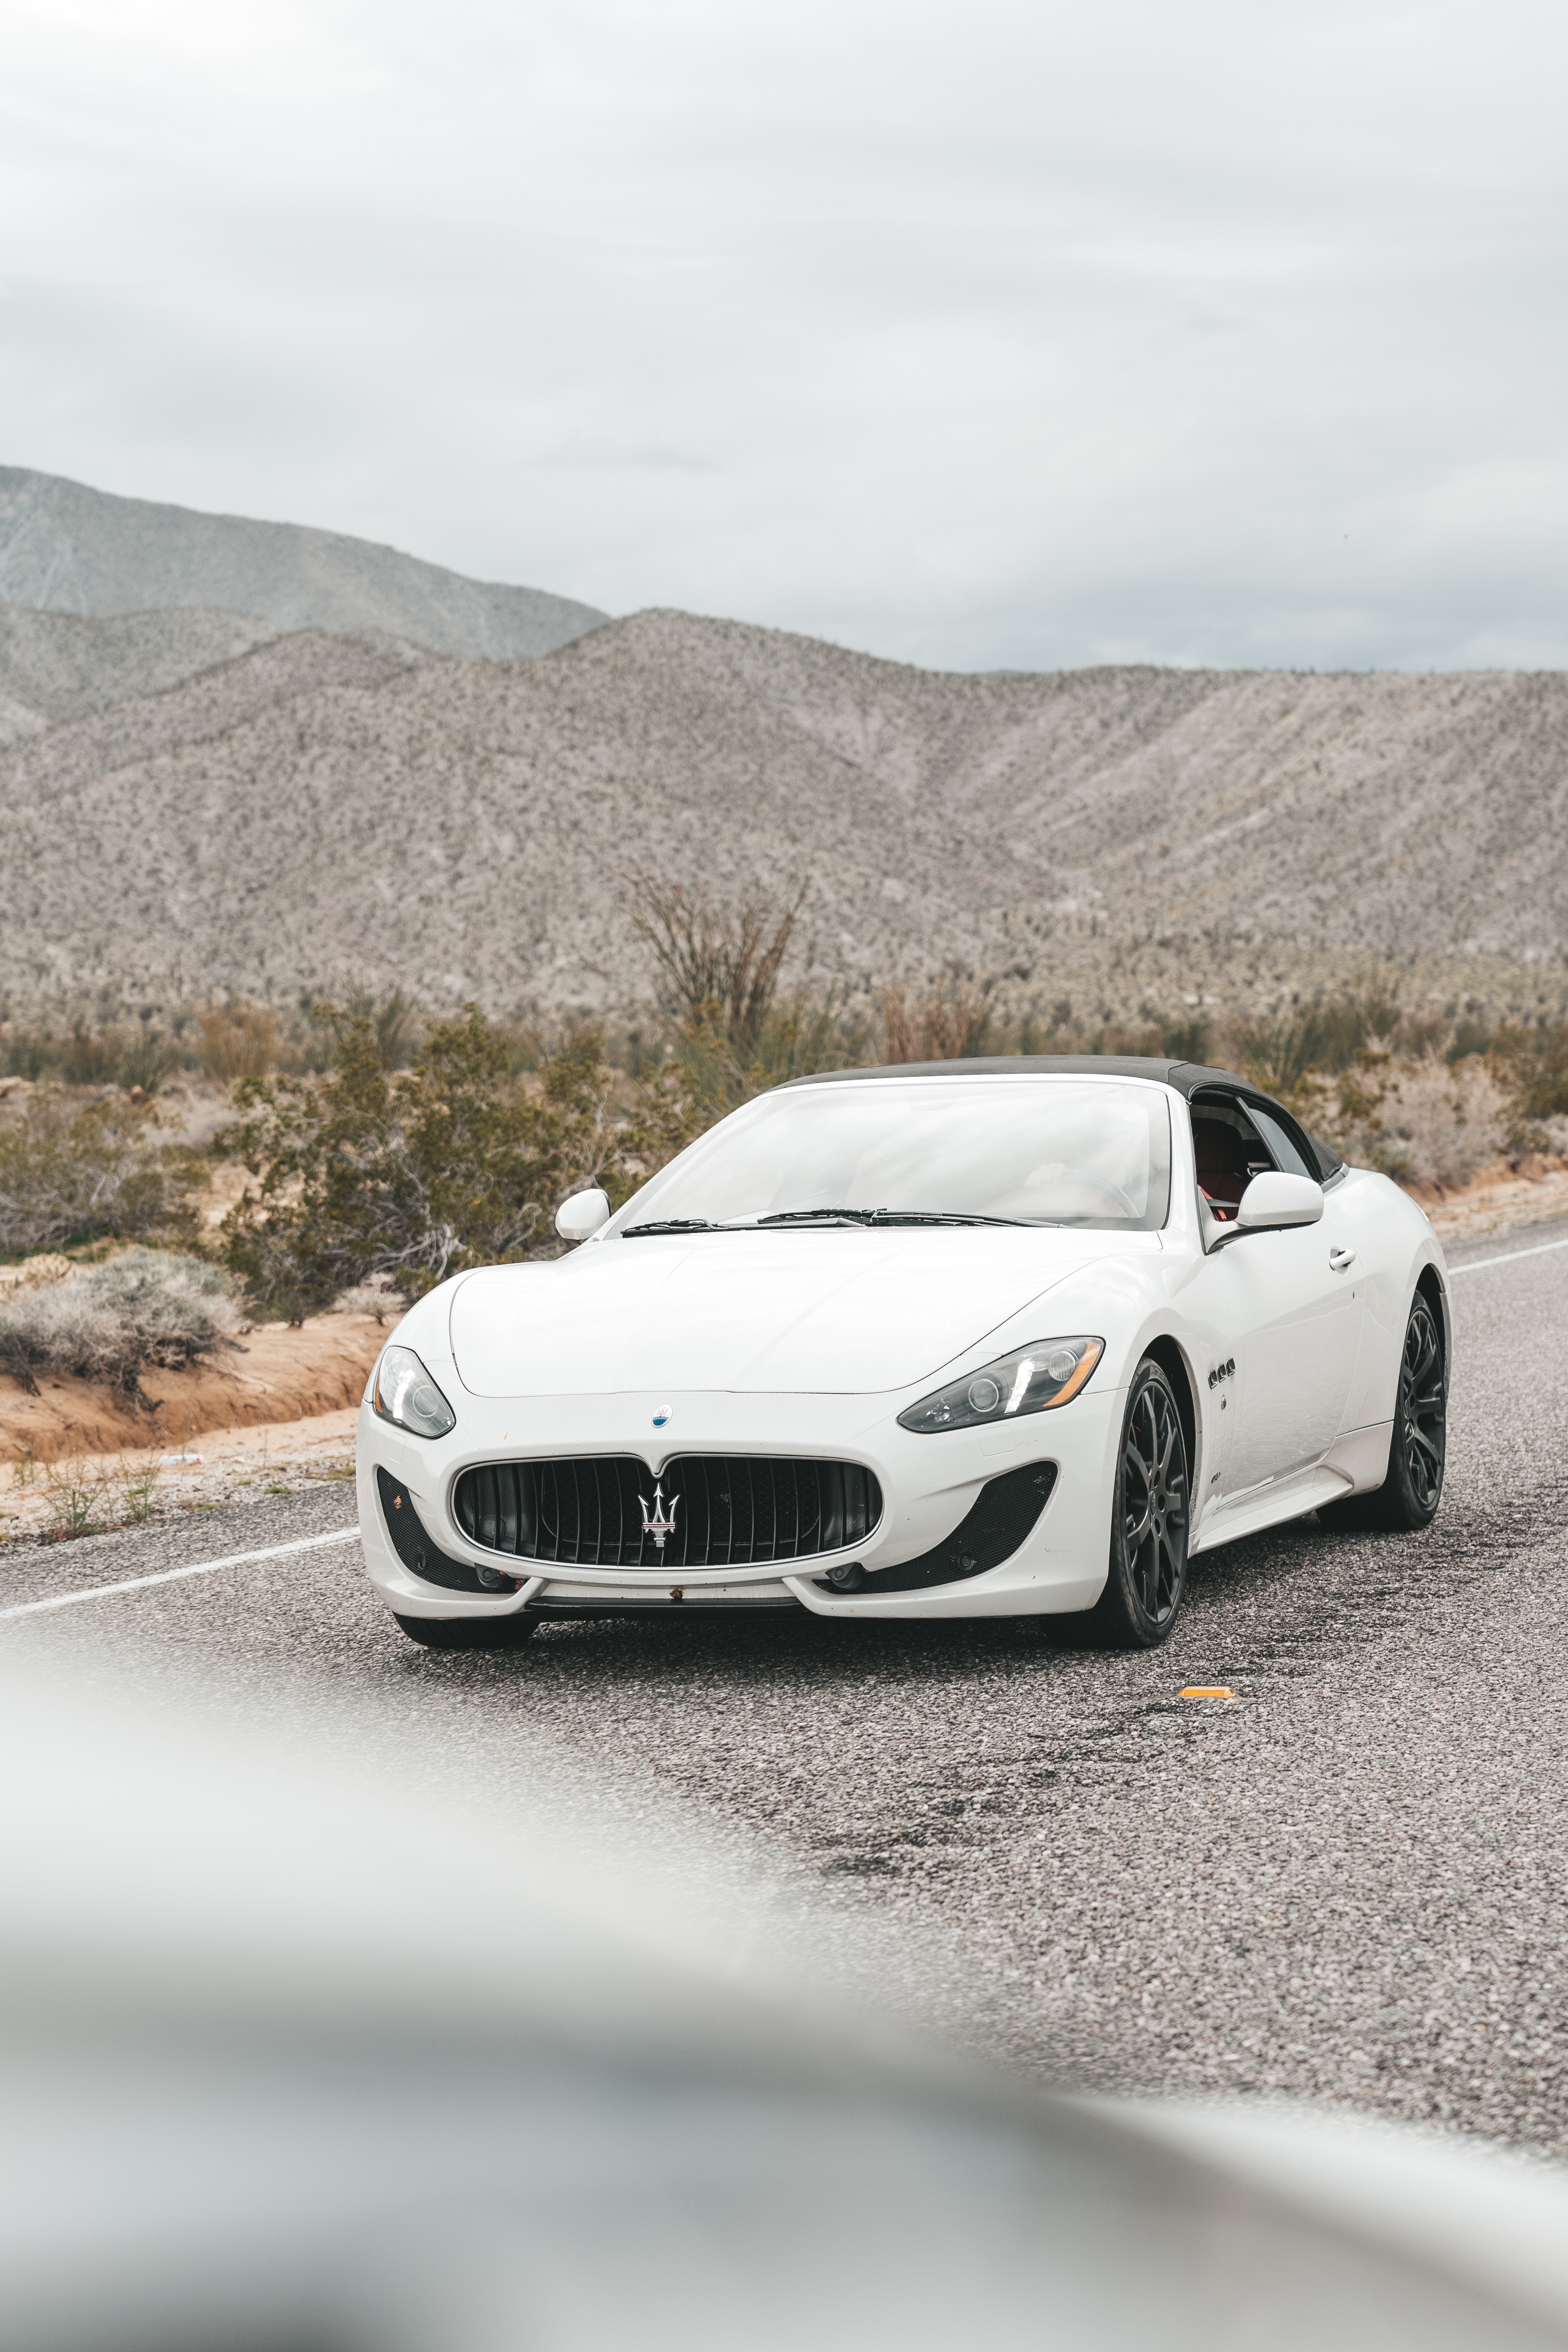 Best Maserati Background for mobile